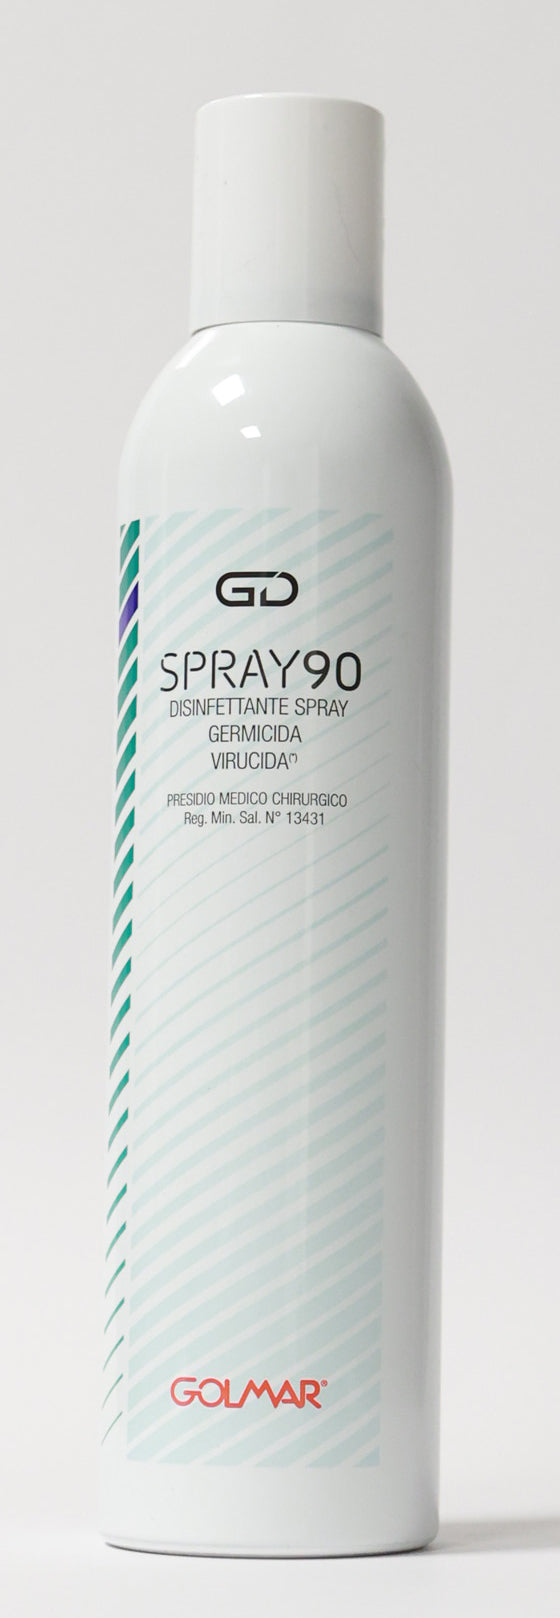 Disinfettante GD Spray90